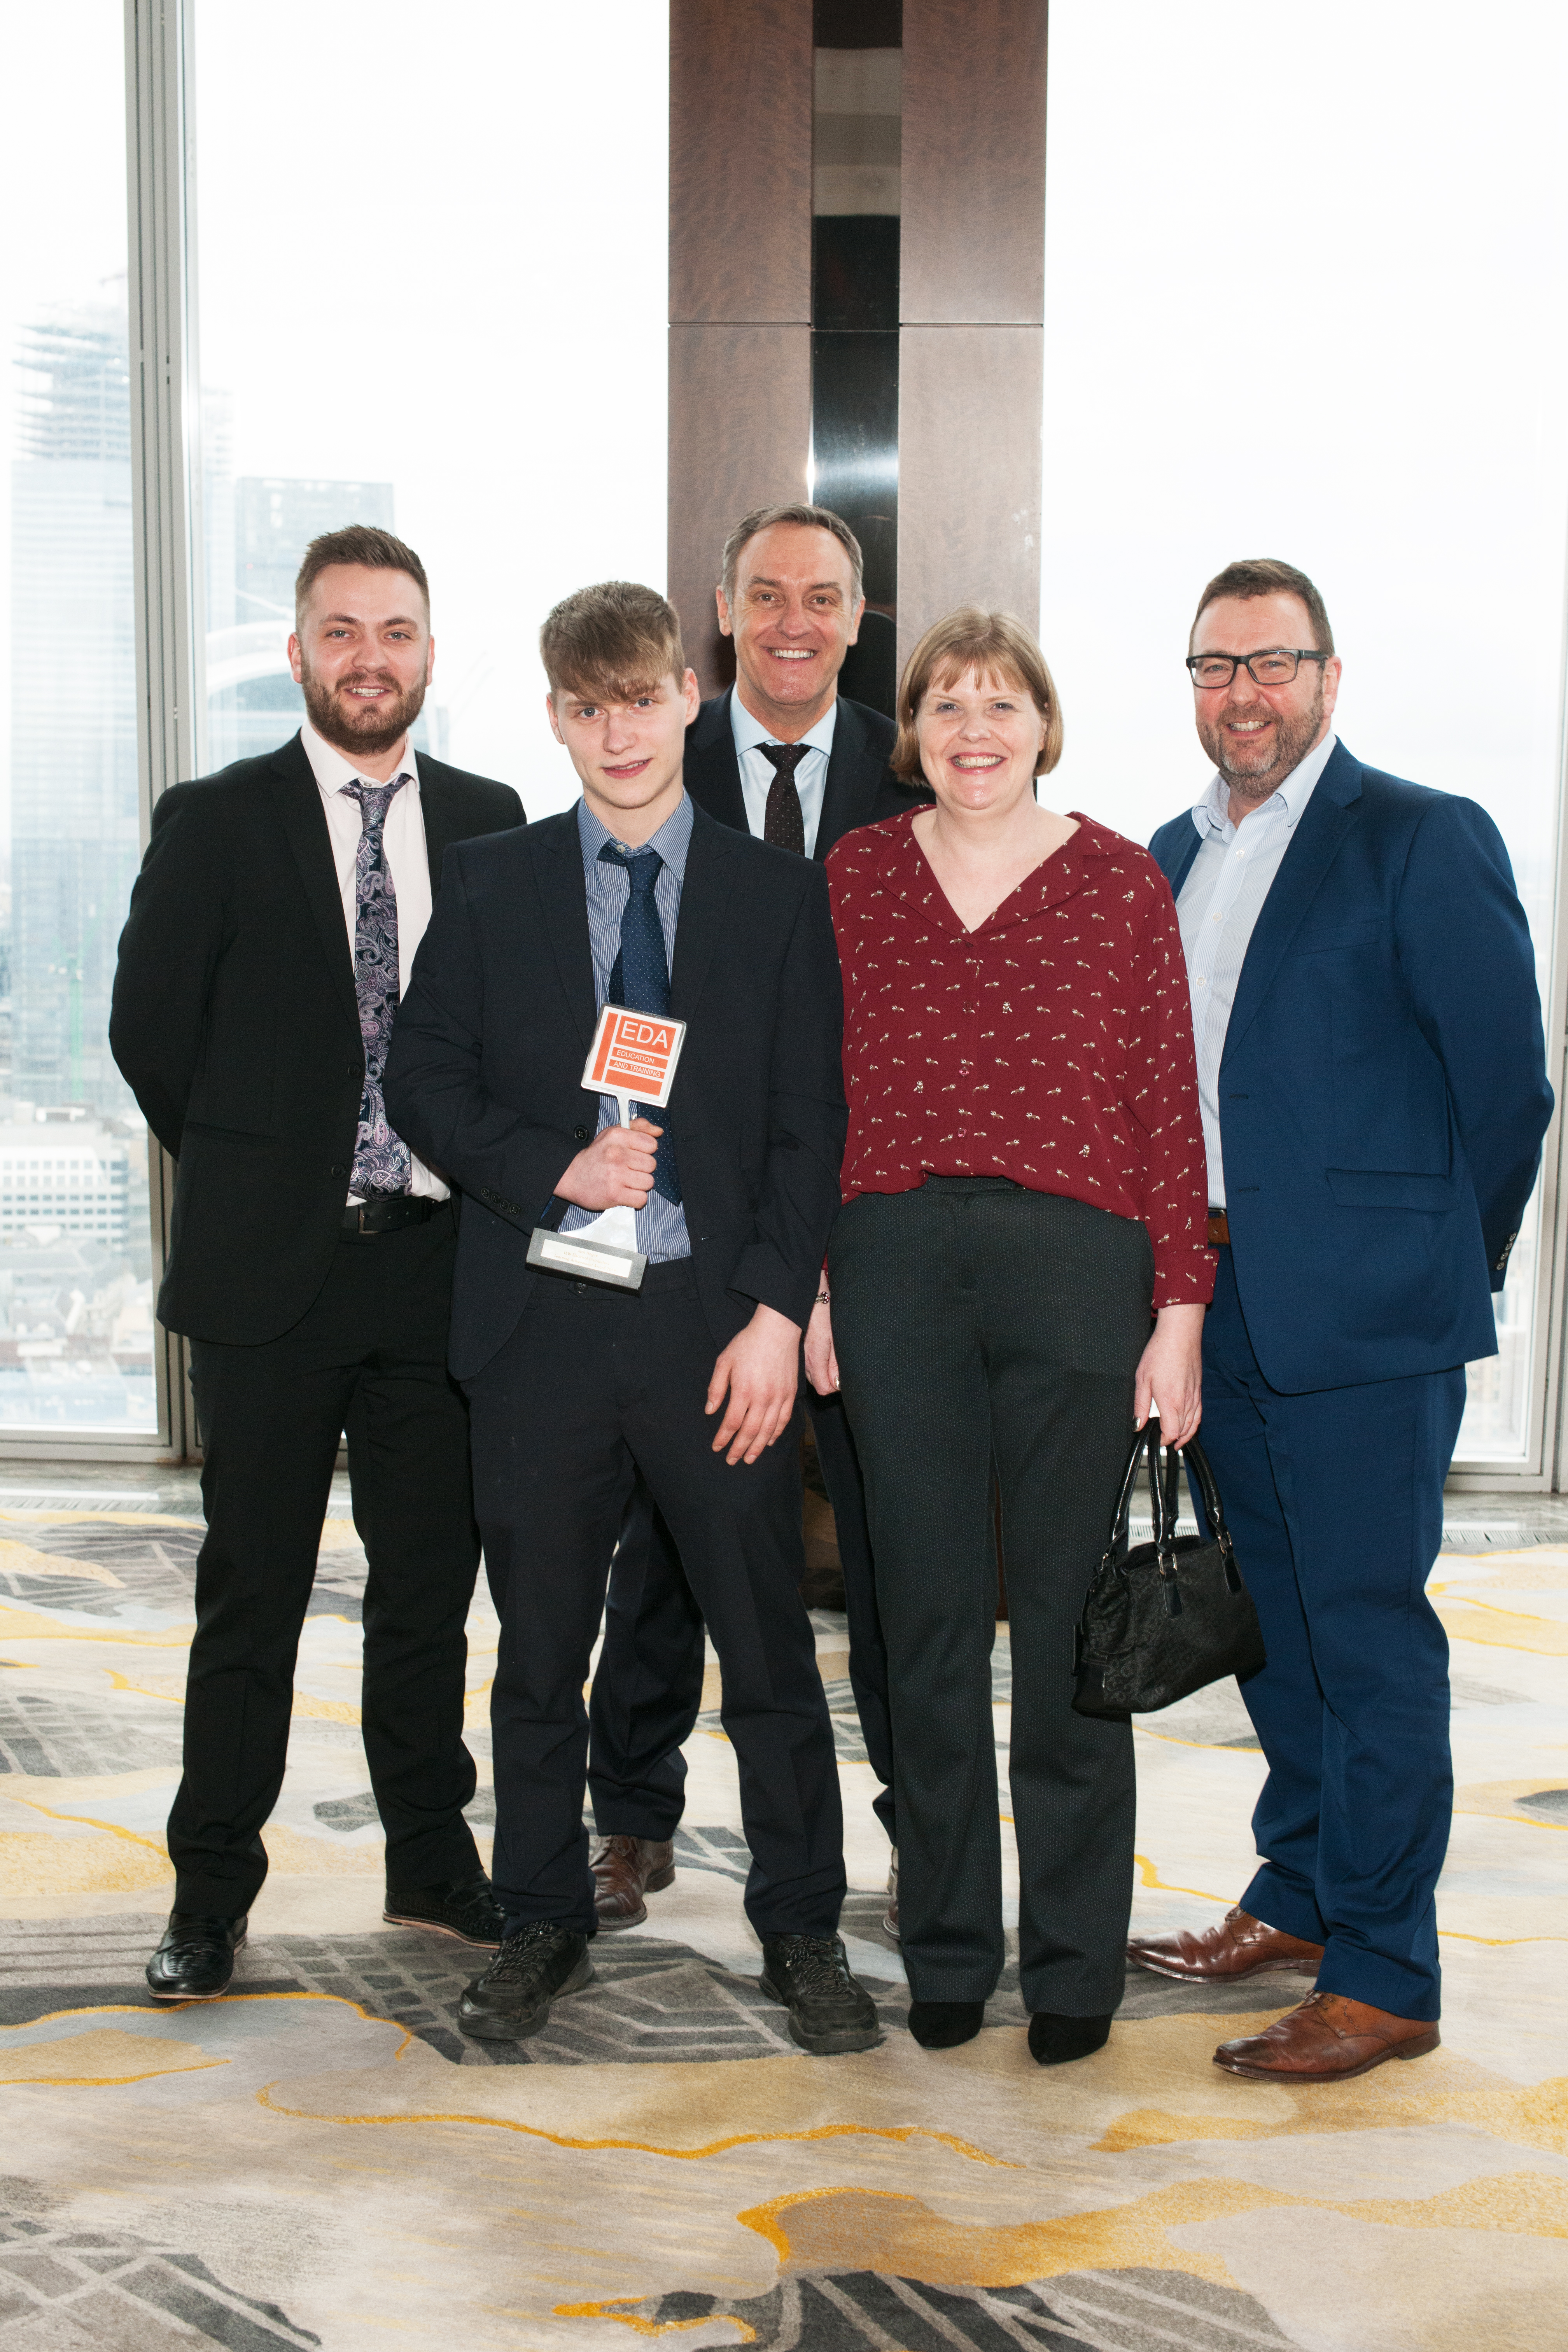 Jack Hague EDA Apprenticeship Award 2019